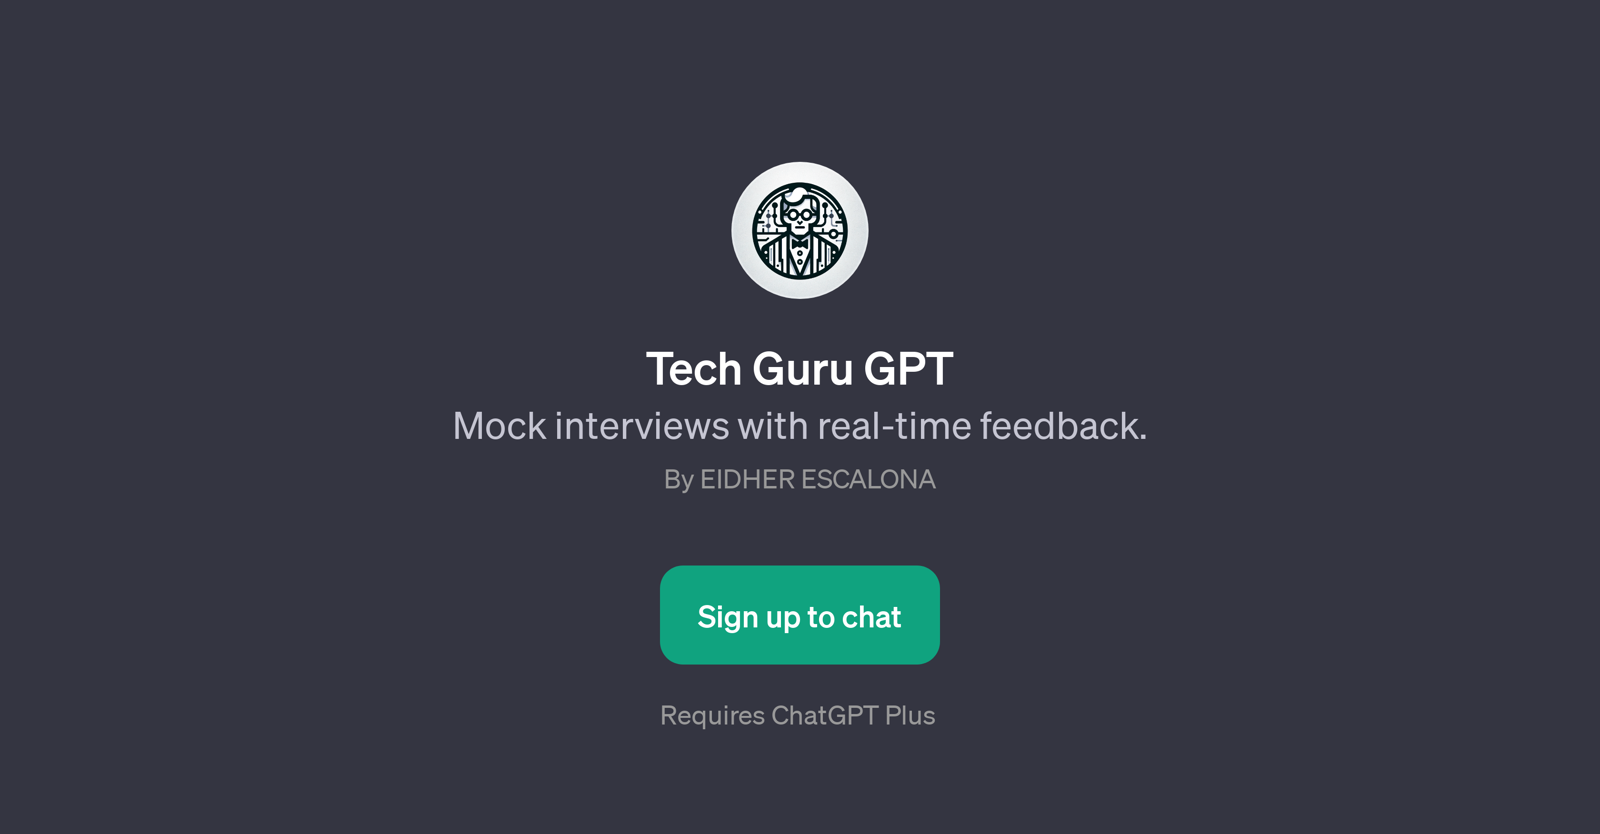 Tech Guru GPT website